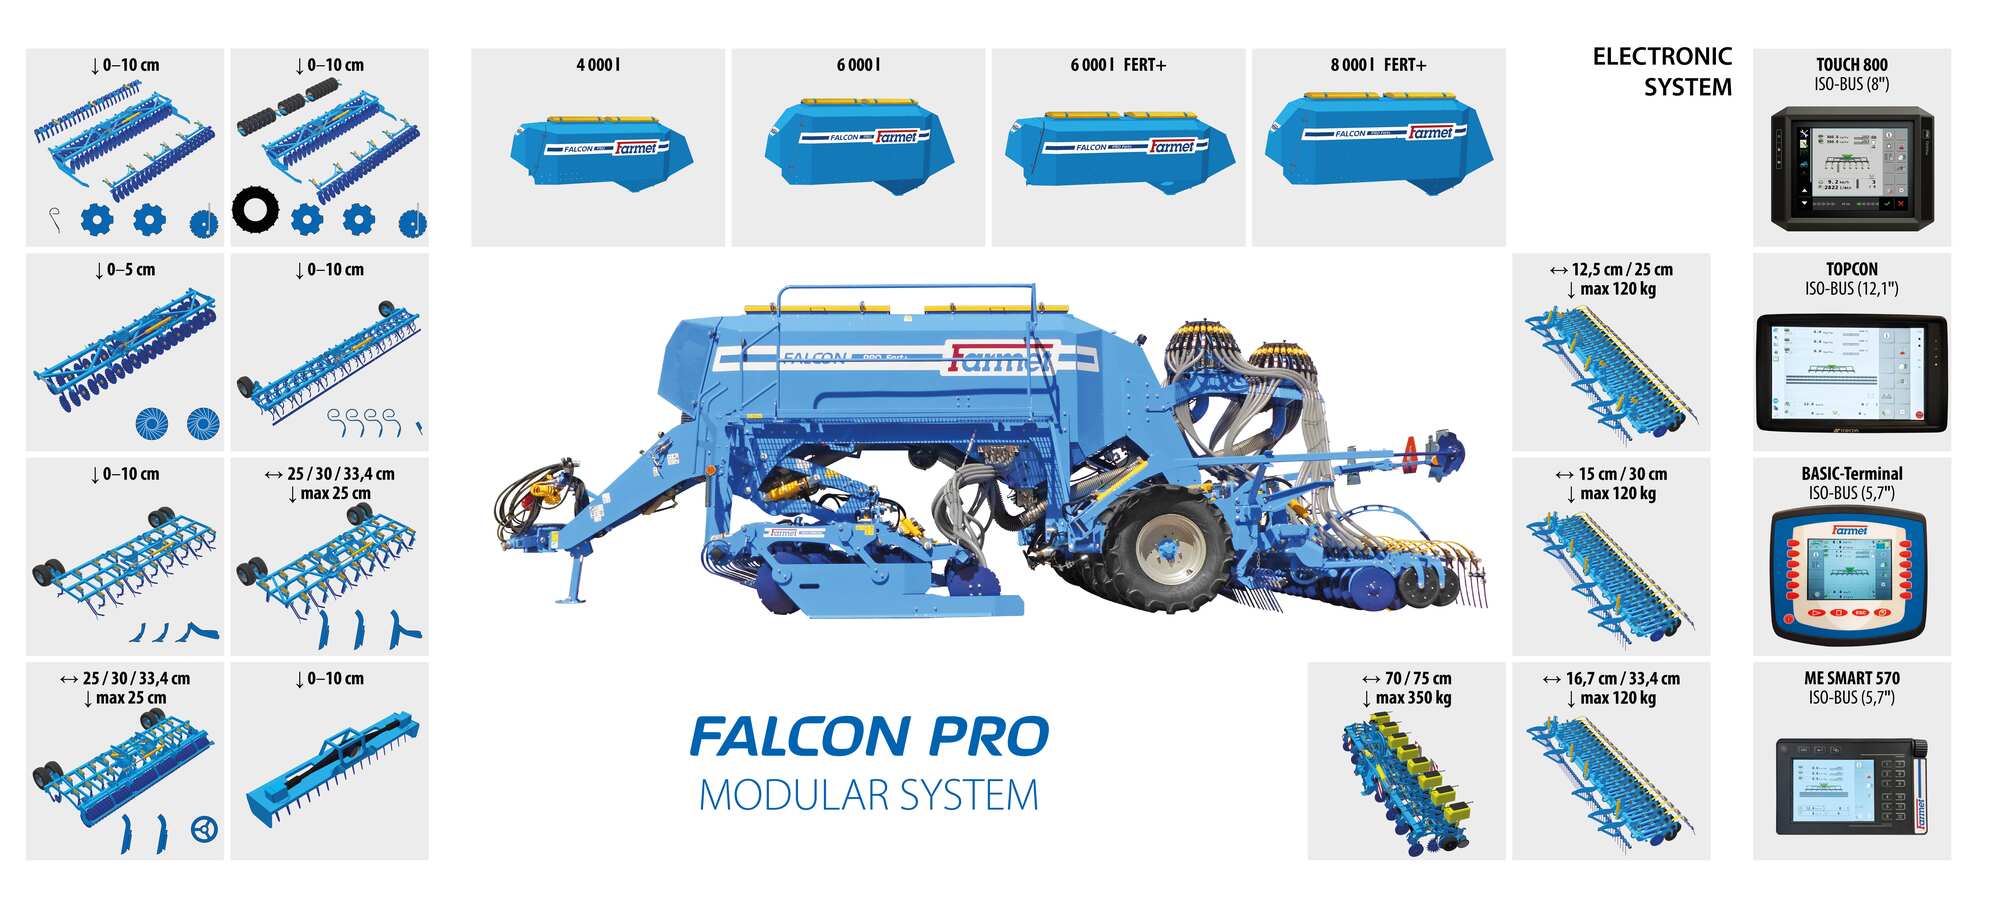 Falcon Pro modulinė sistema